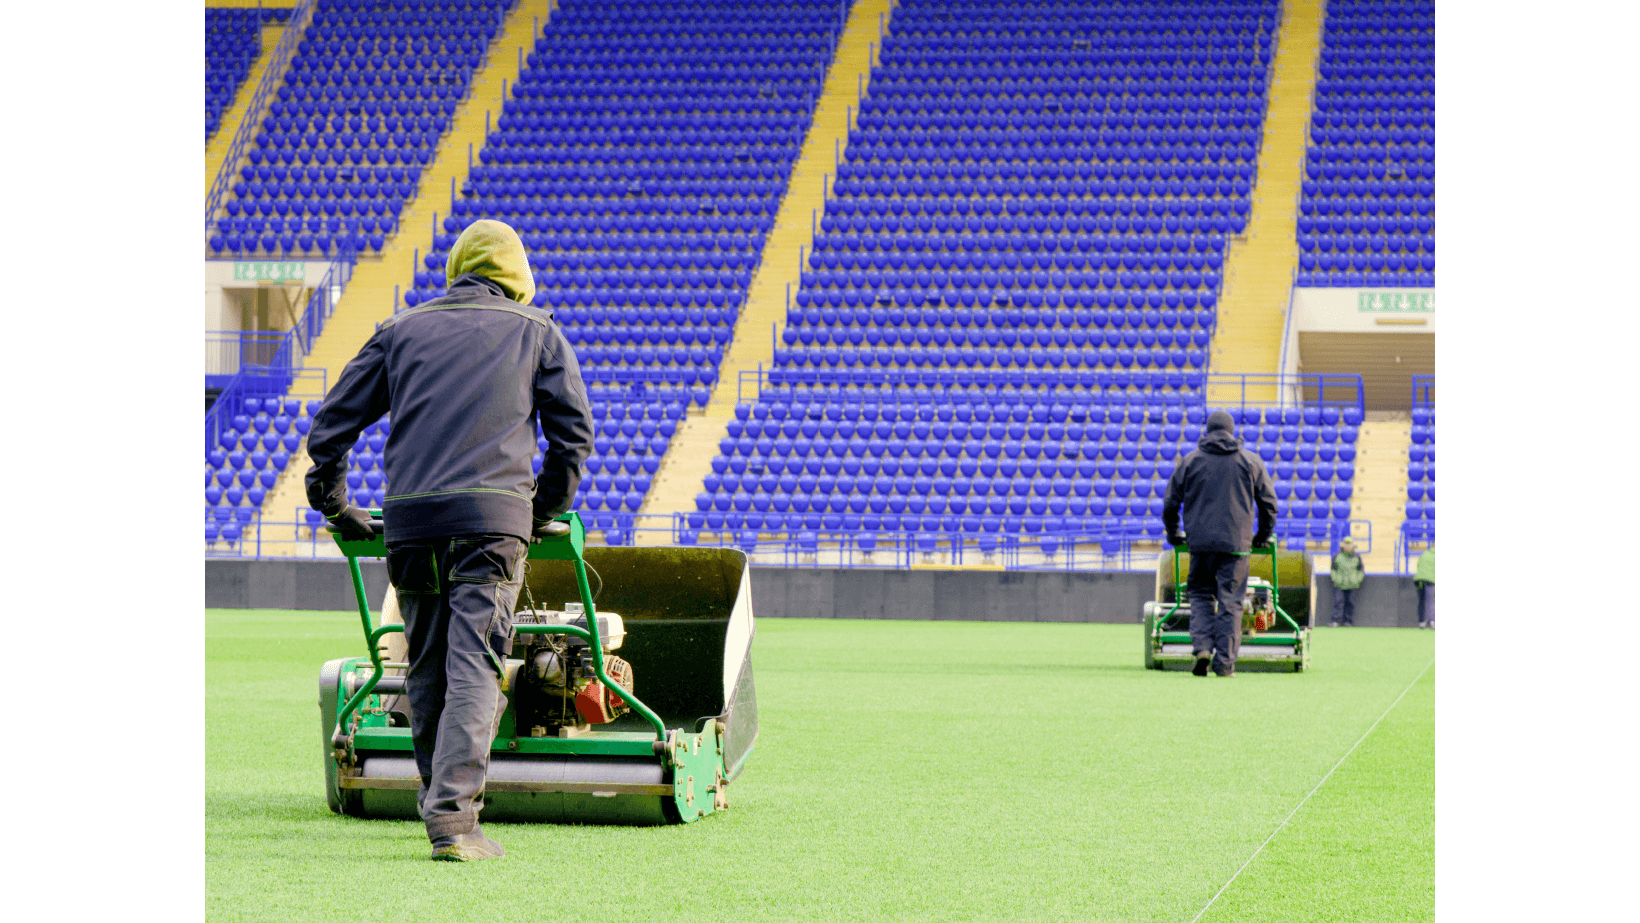 Landscape maintenance crew cutting grass in football field